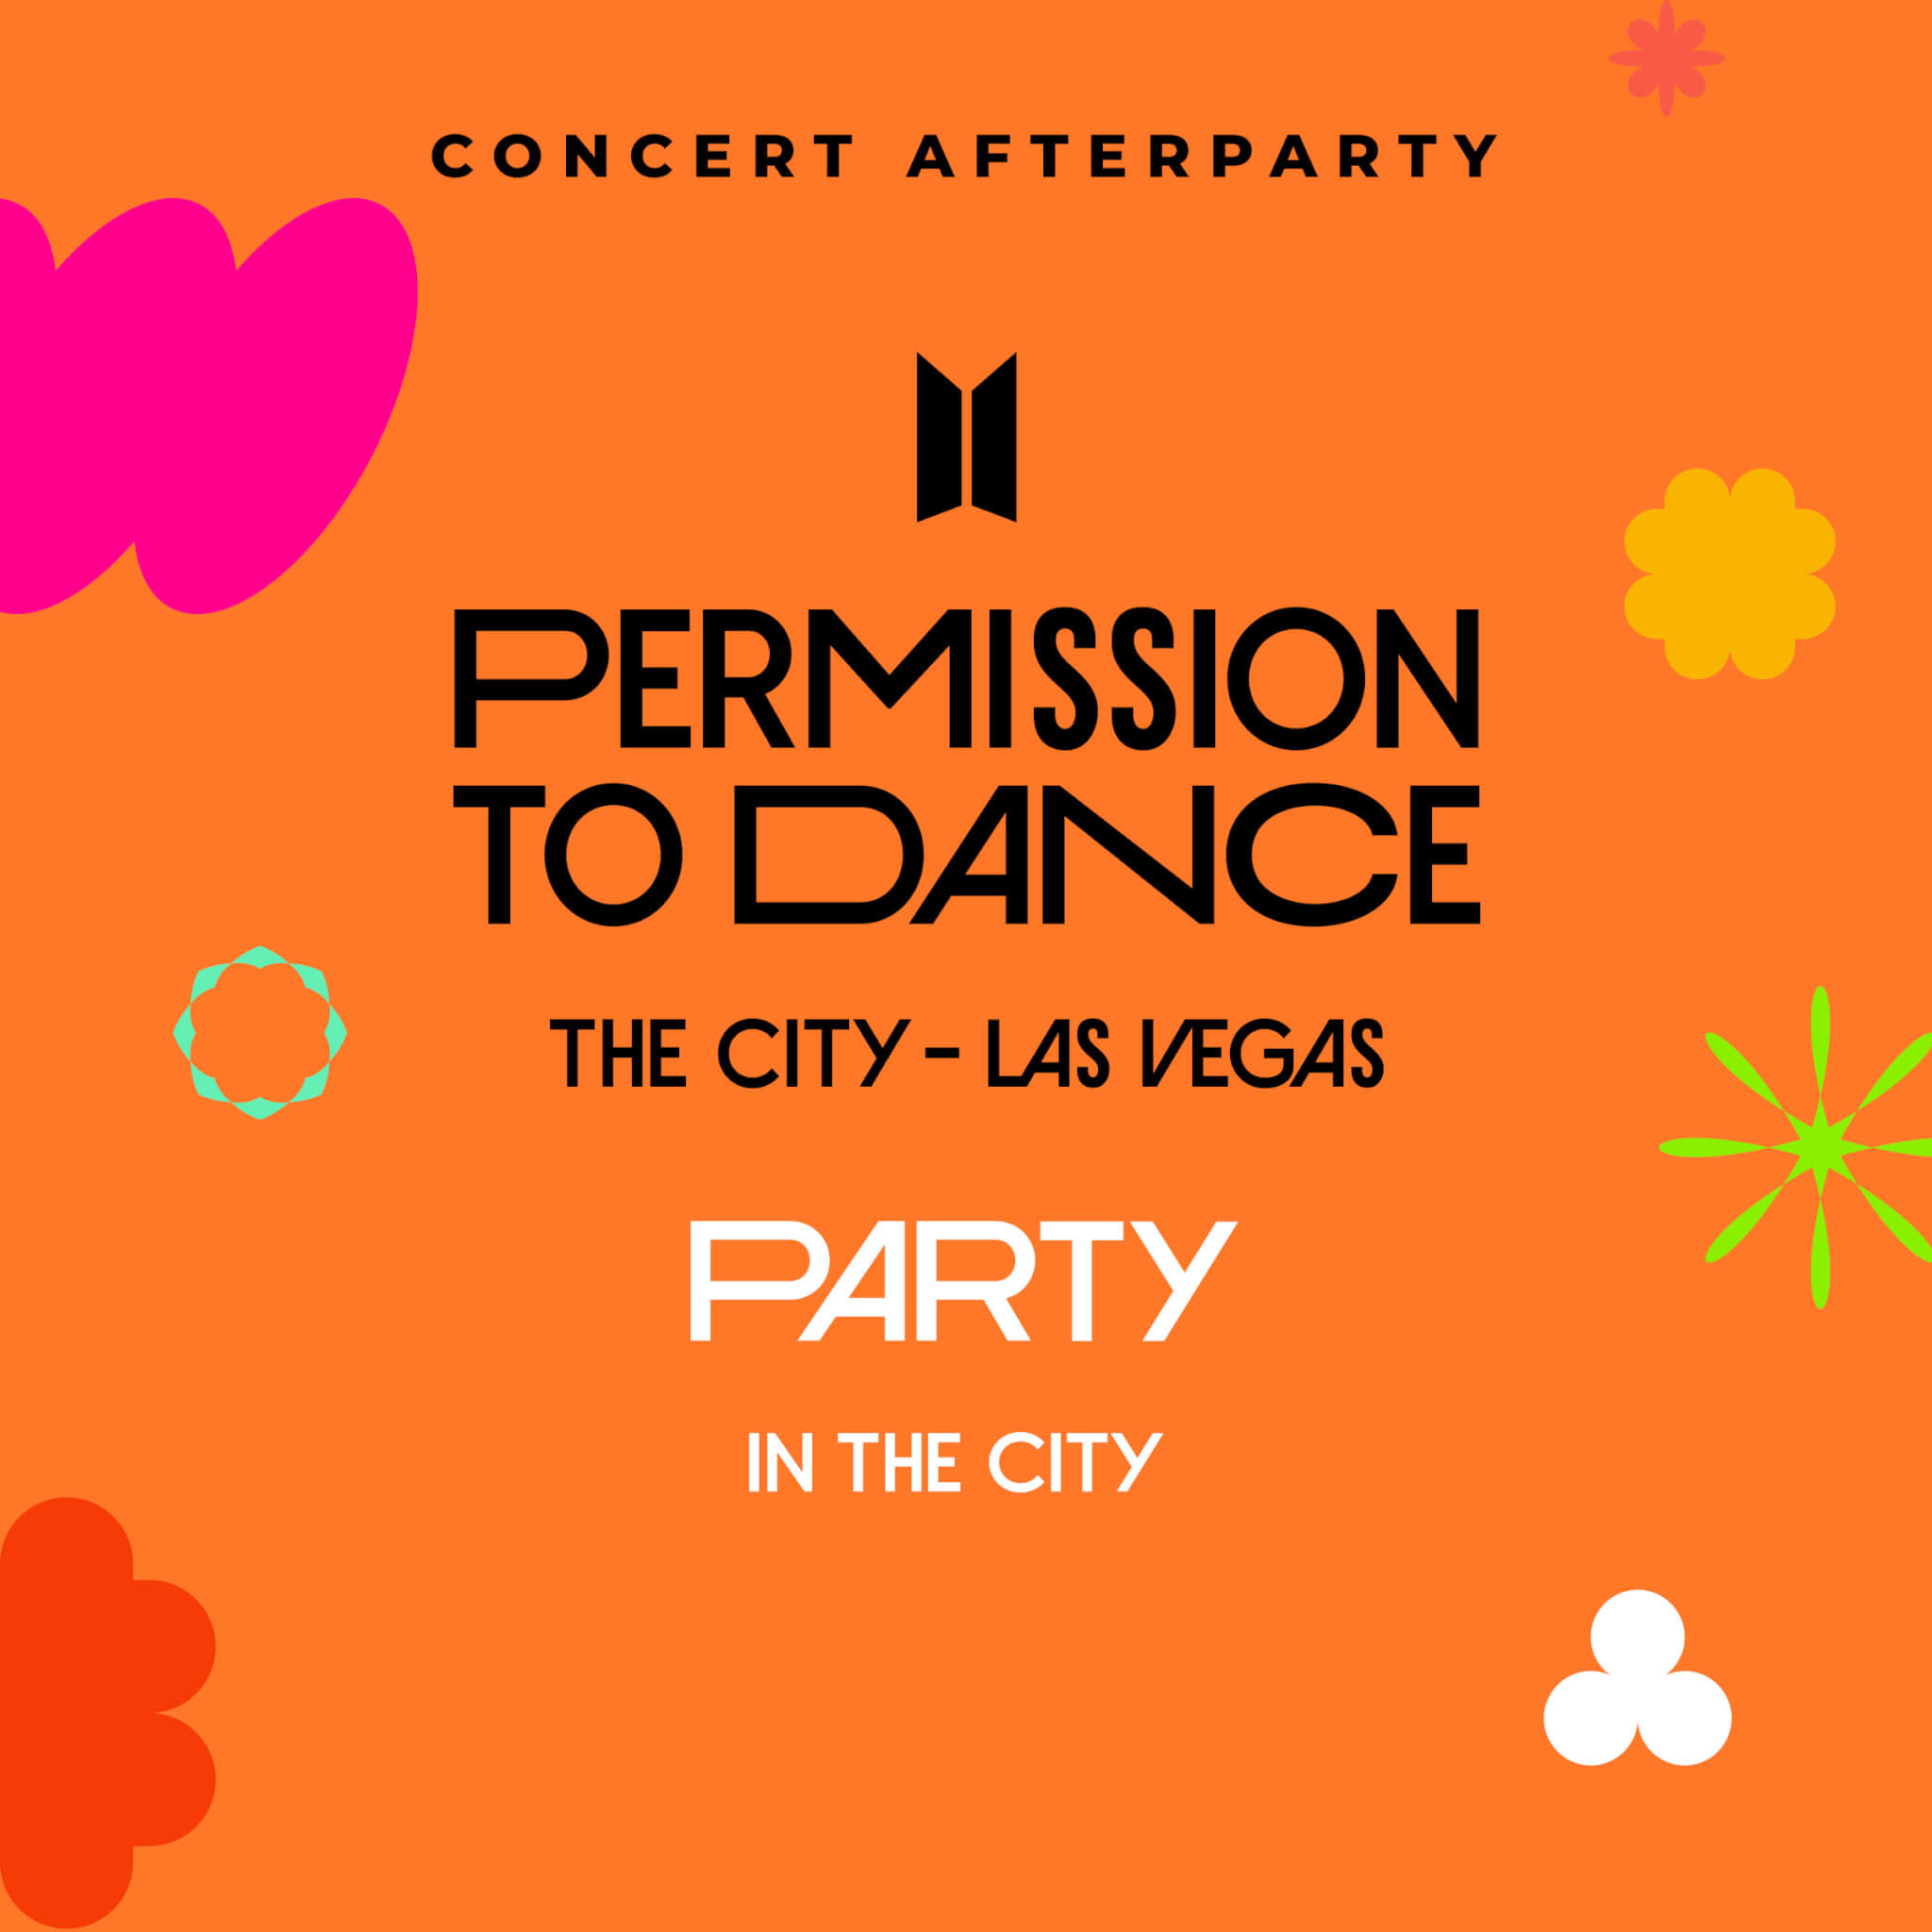 04/15/22 BTS Permission to Dance - JEWEL - Tao Group Hospitality